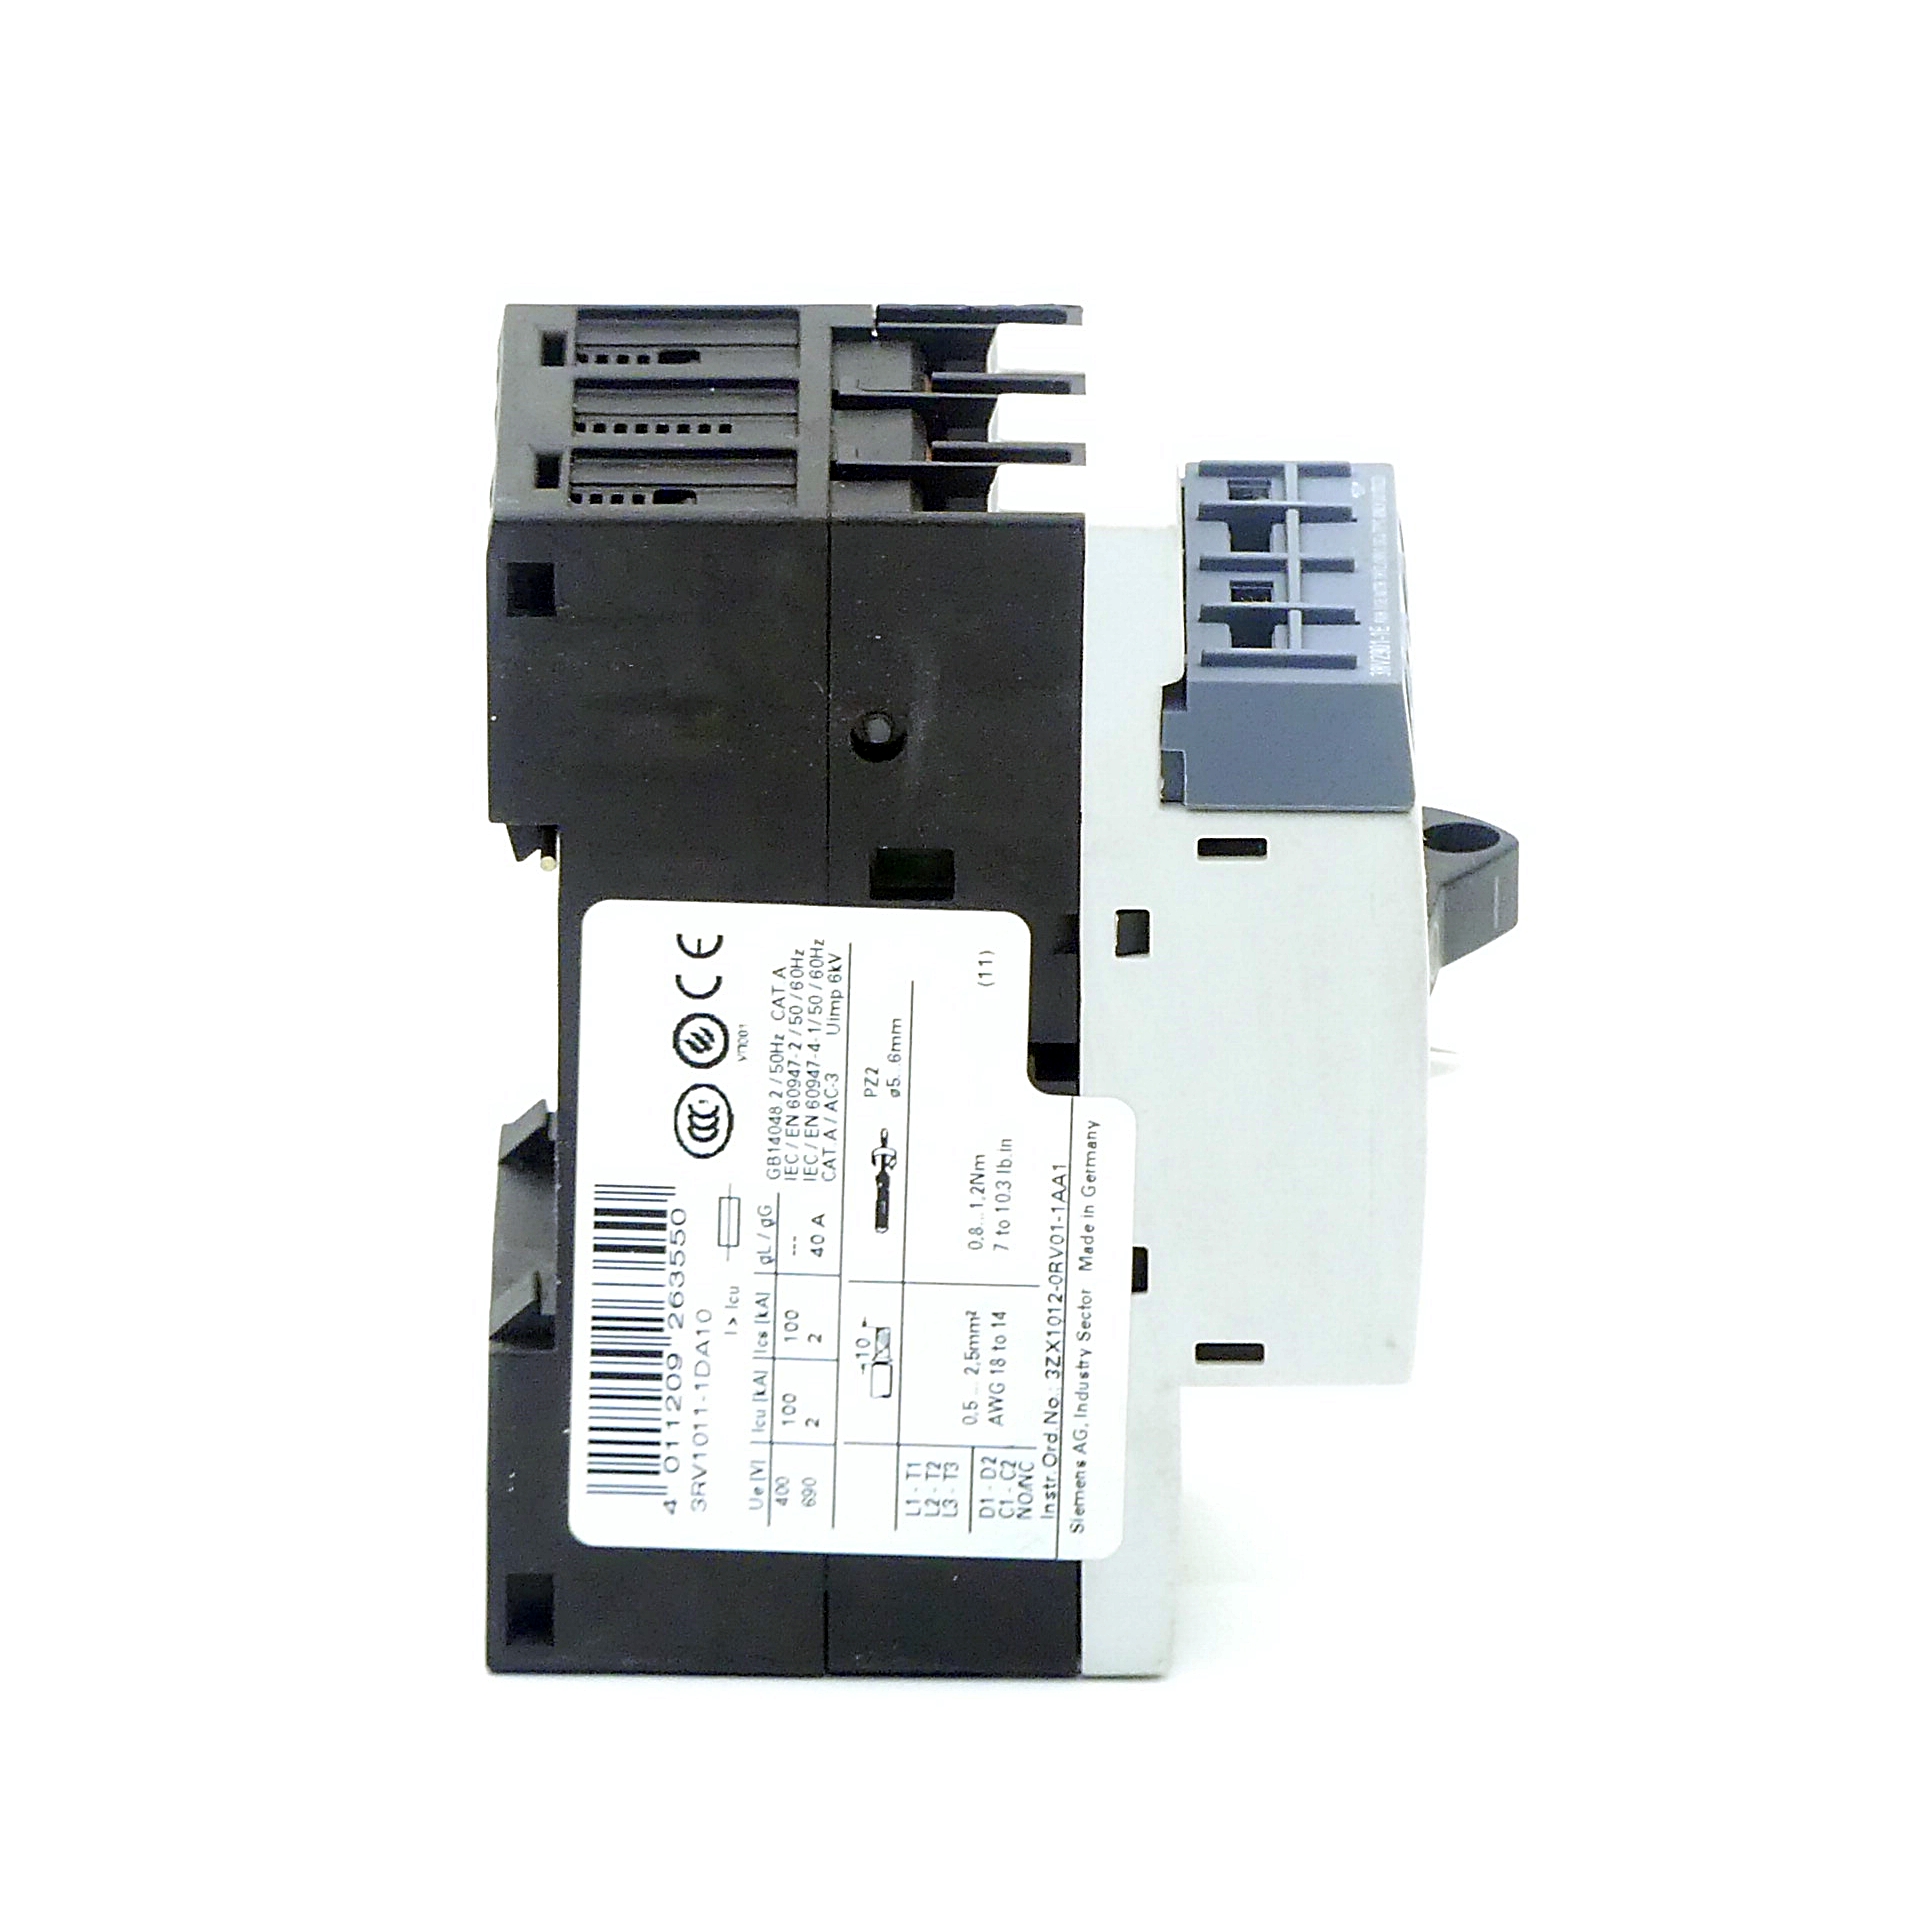 Circuit breaker 3RV1011-1DA10 